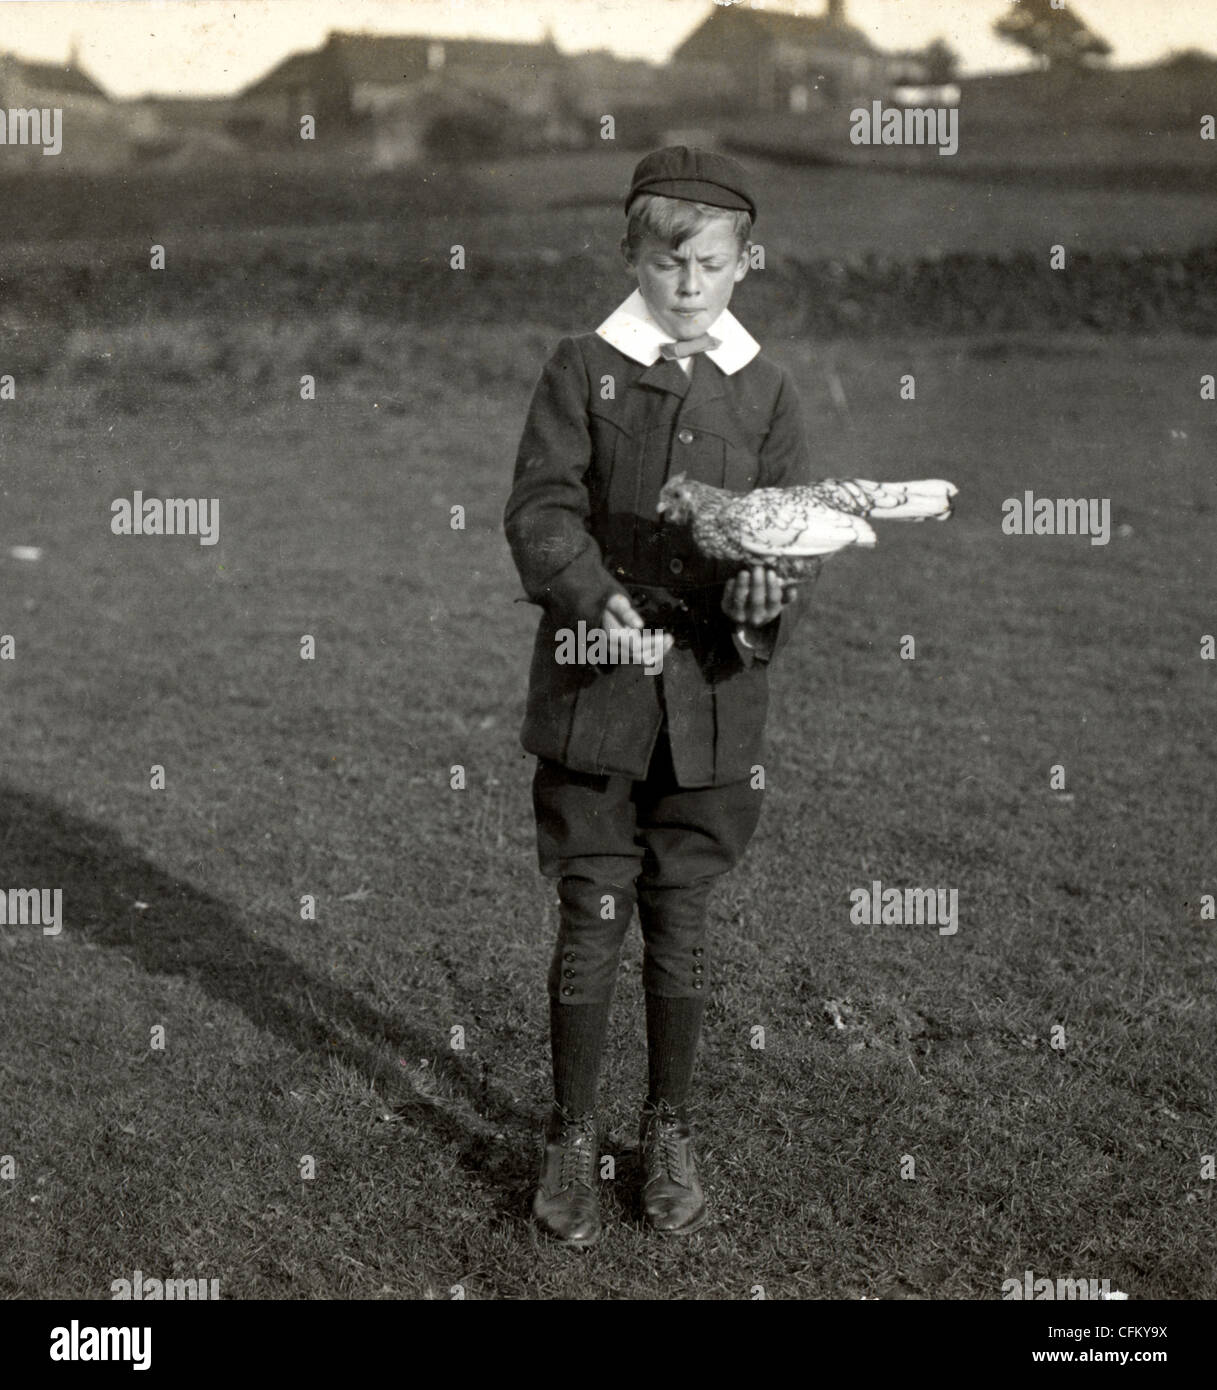 Little Boy Holding Pet Pigeon Outdoors Stock Photo